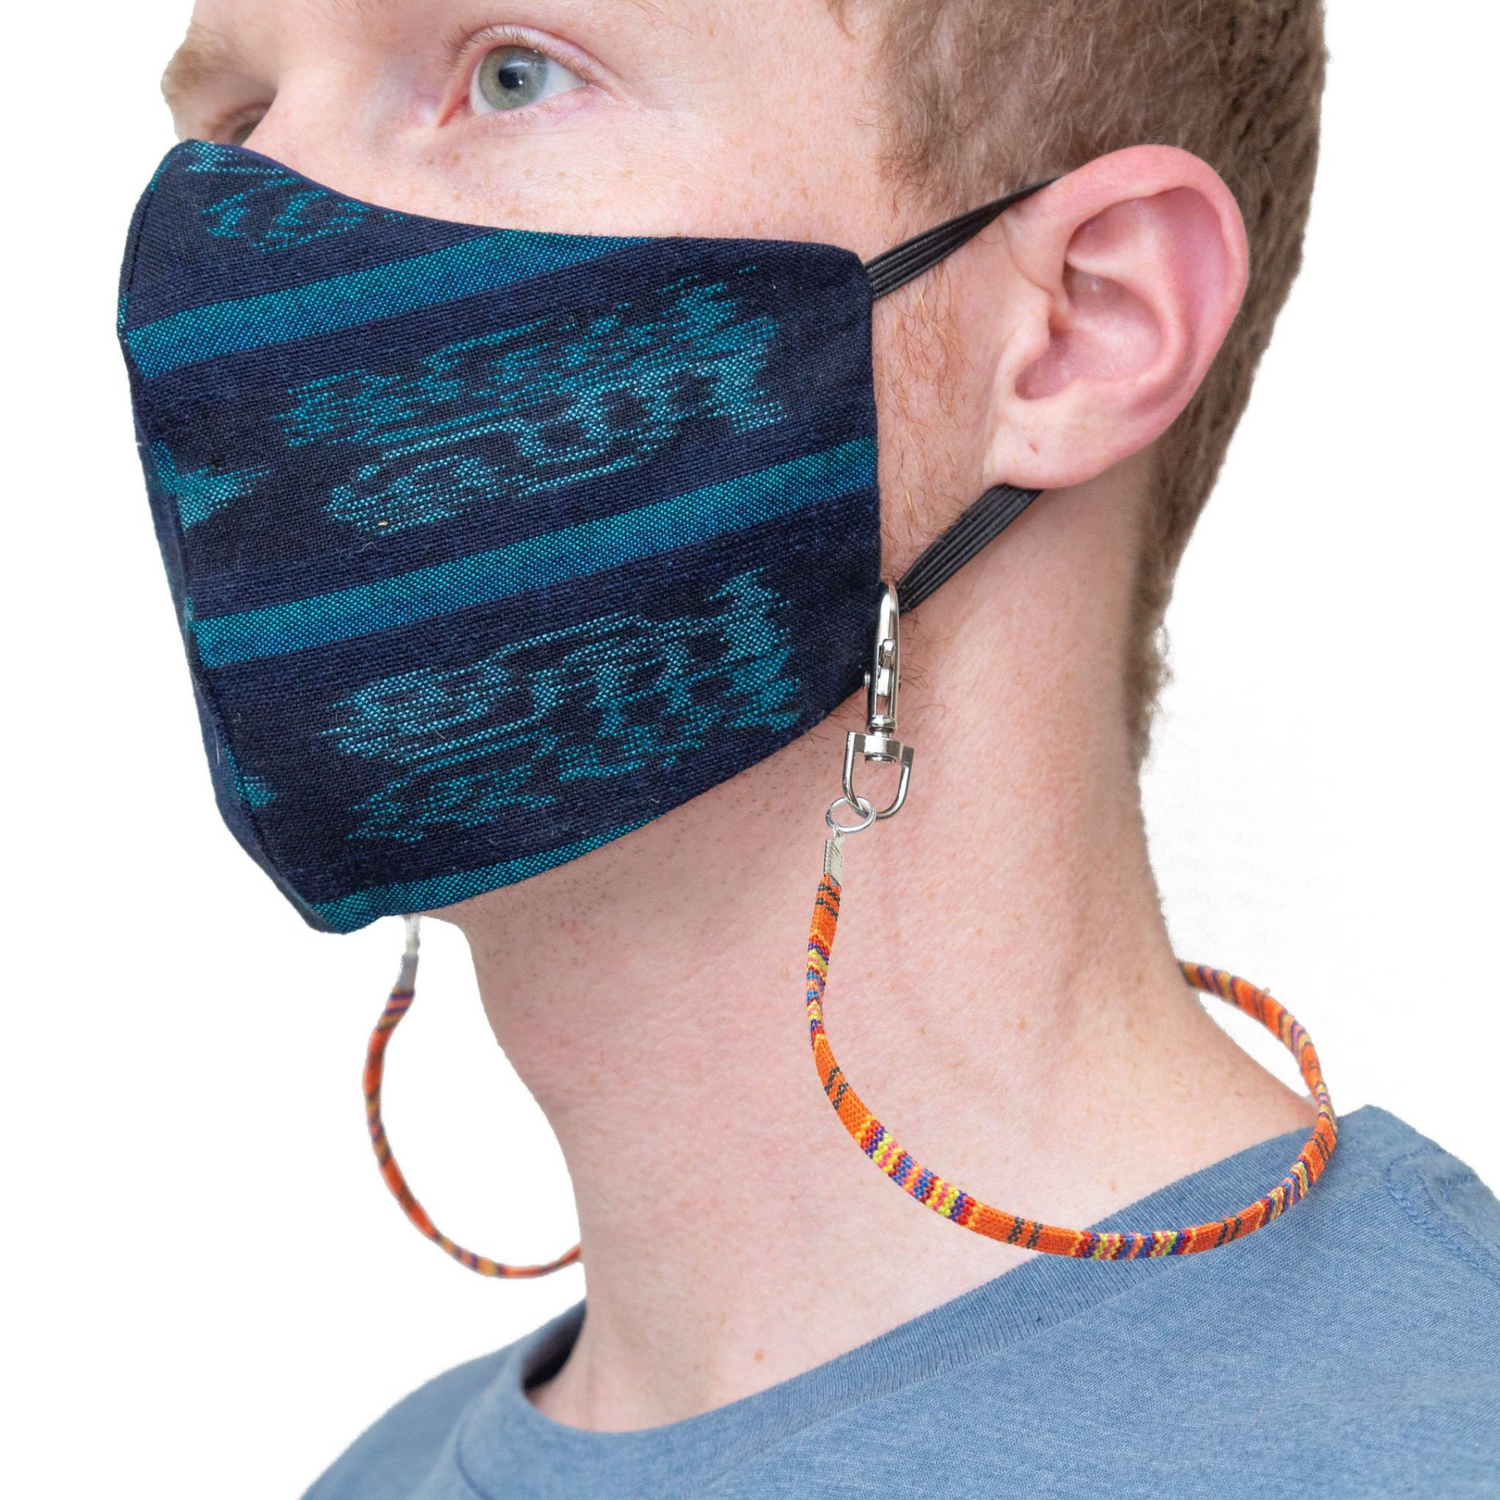 Face Mask Holders - USA Medical Supply